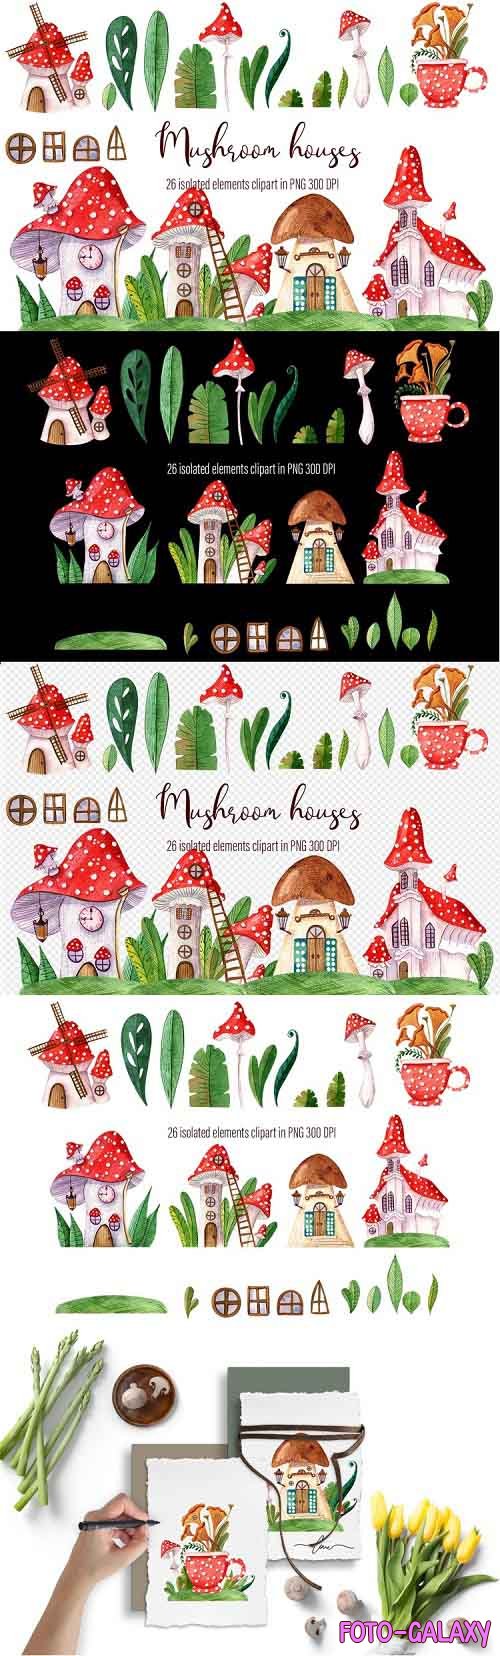 Watercolor hand-drawn set of beautiful Mushroom houses - 1217917